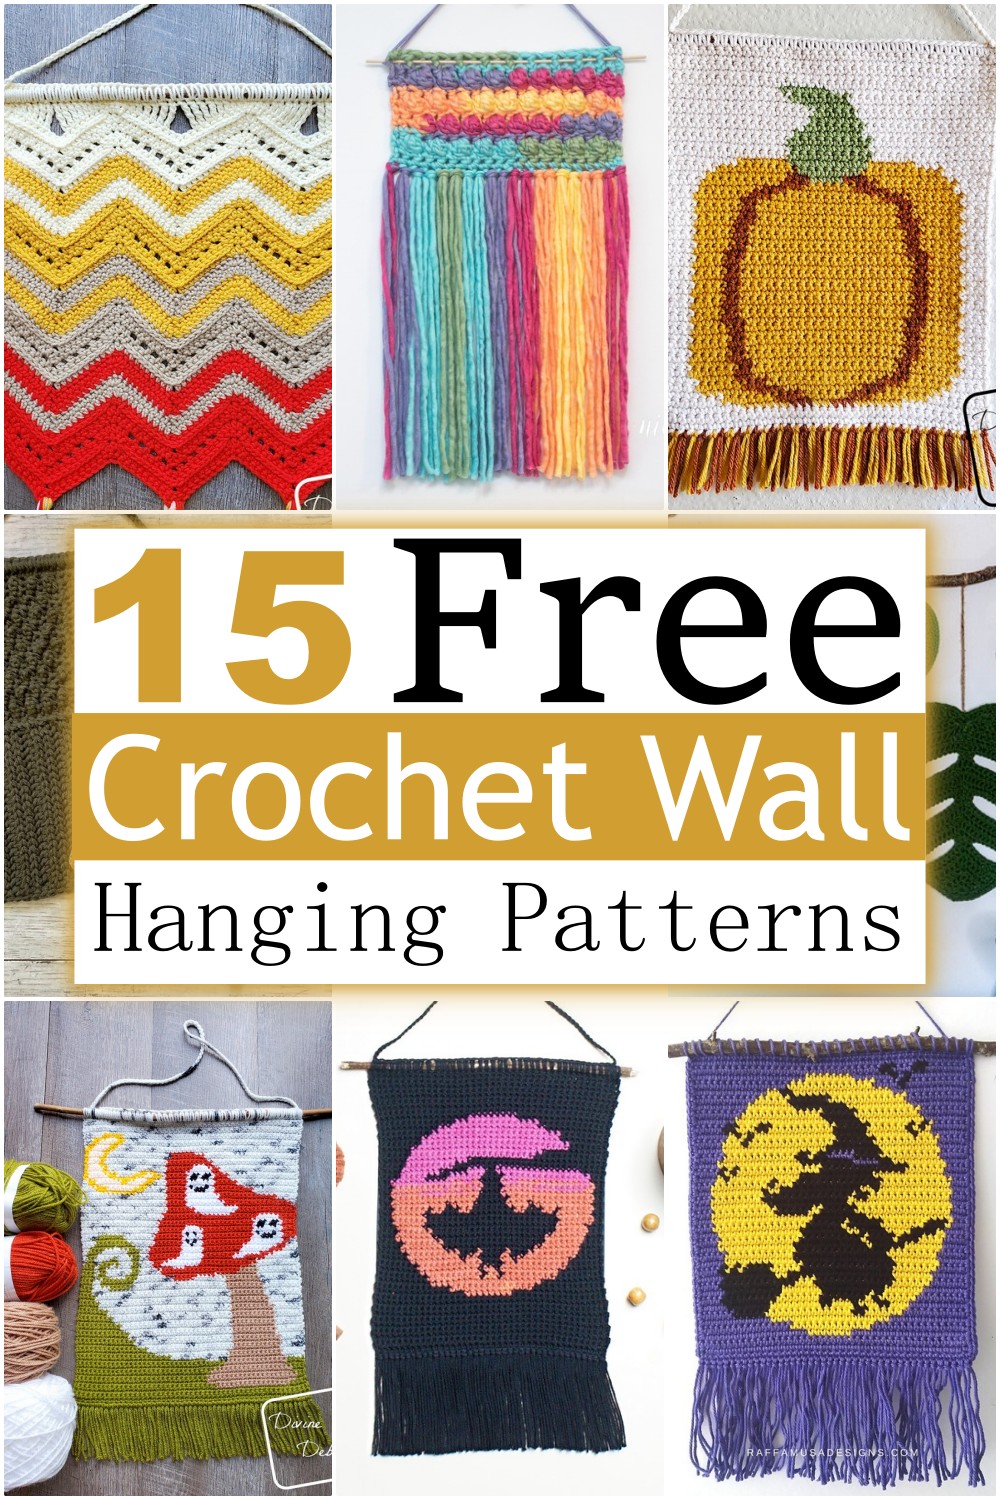 Free Crochet Wall Hanging Patterns